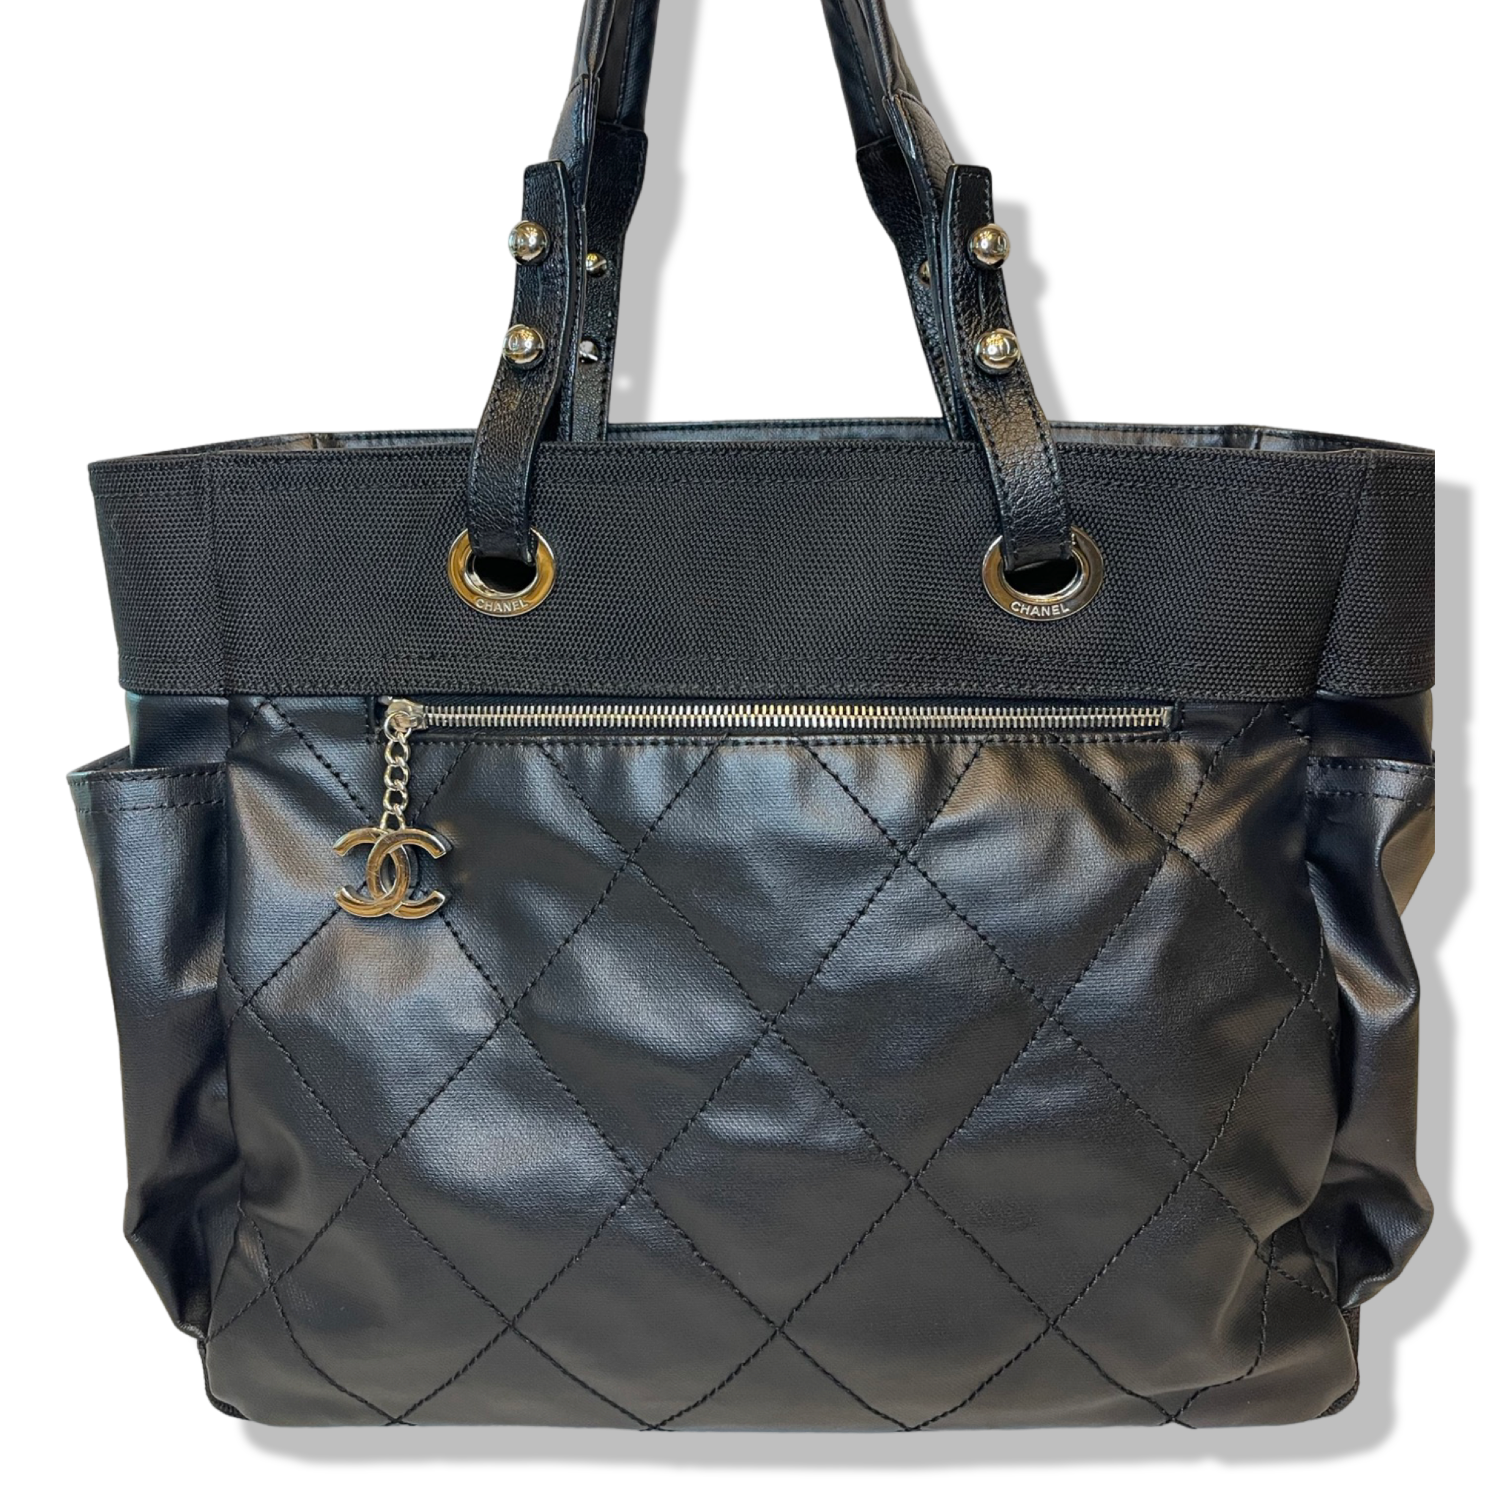 Paris-Biarritz Chanel Handbags for Women - Vestiaire Collective